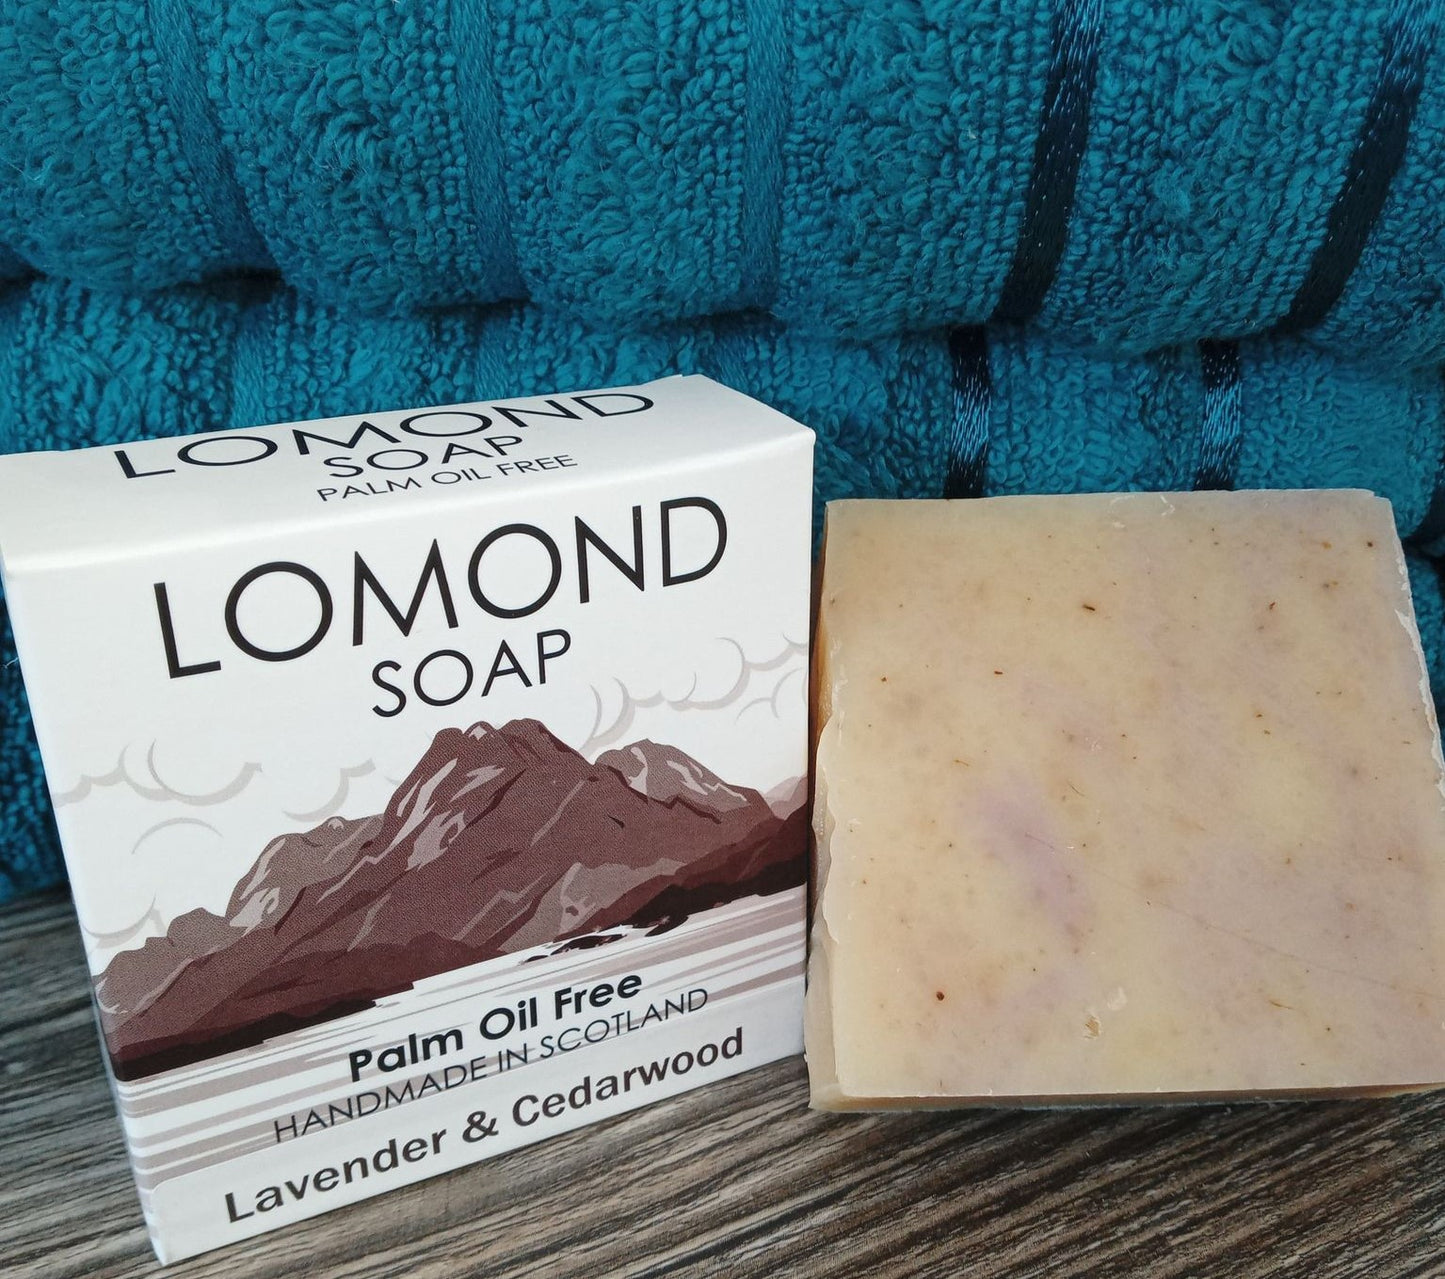 Lavender & cedarwood soap